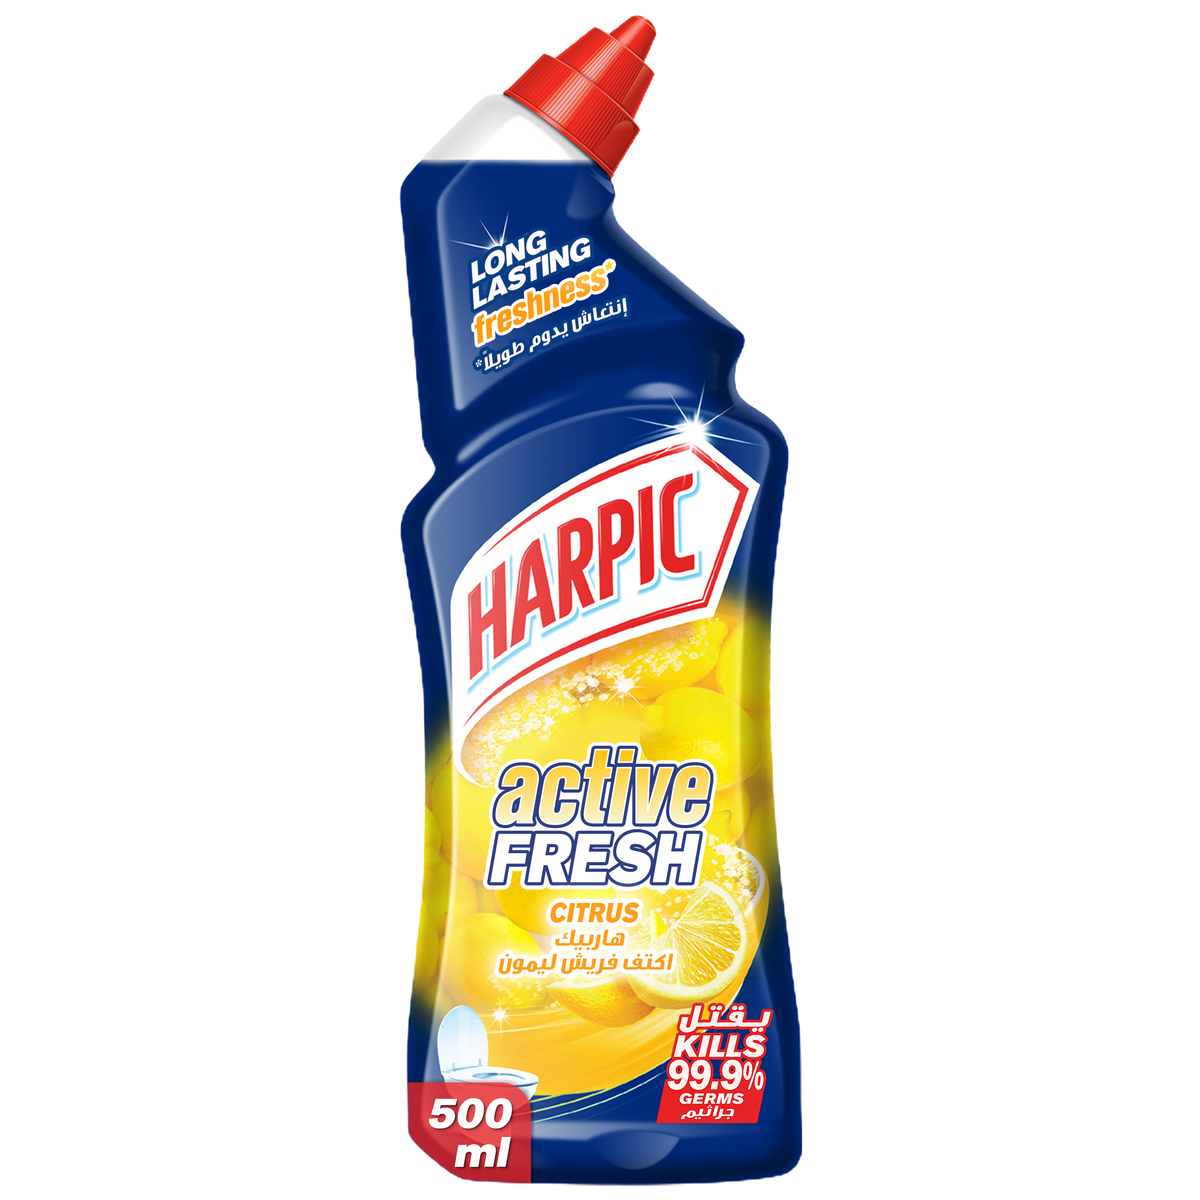 Harpic Citrus Active Fresh Toilet Cleaner 500 ml